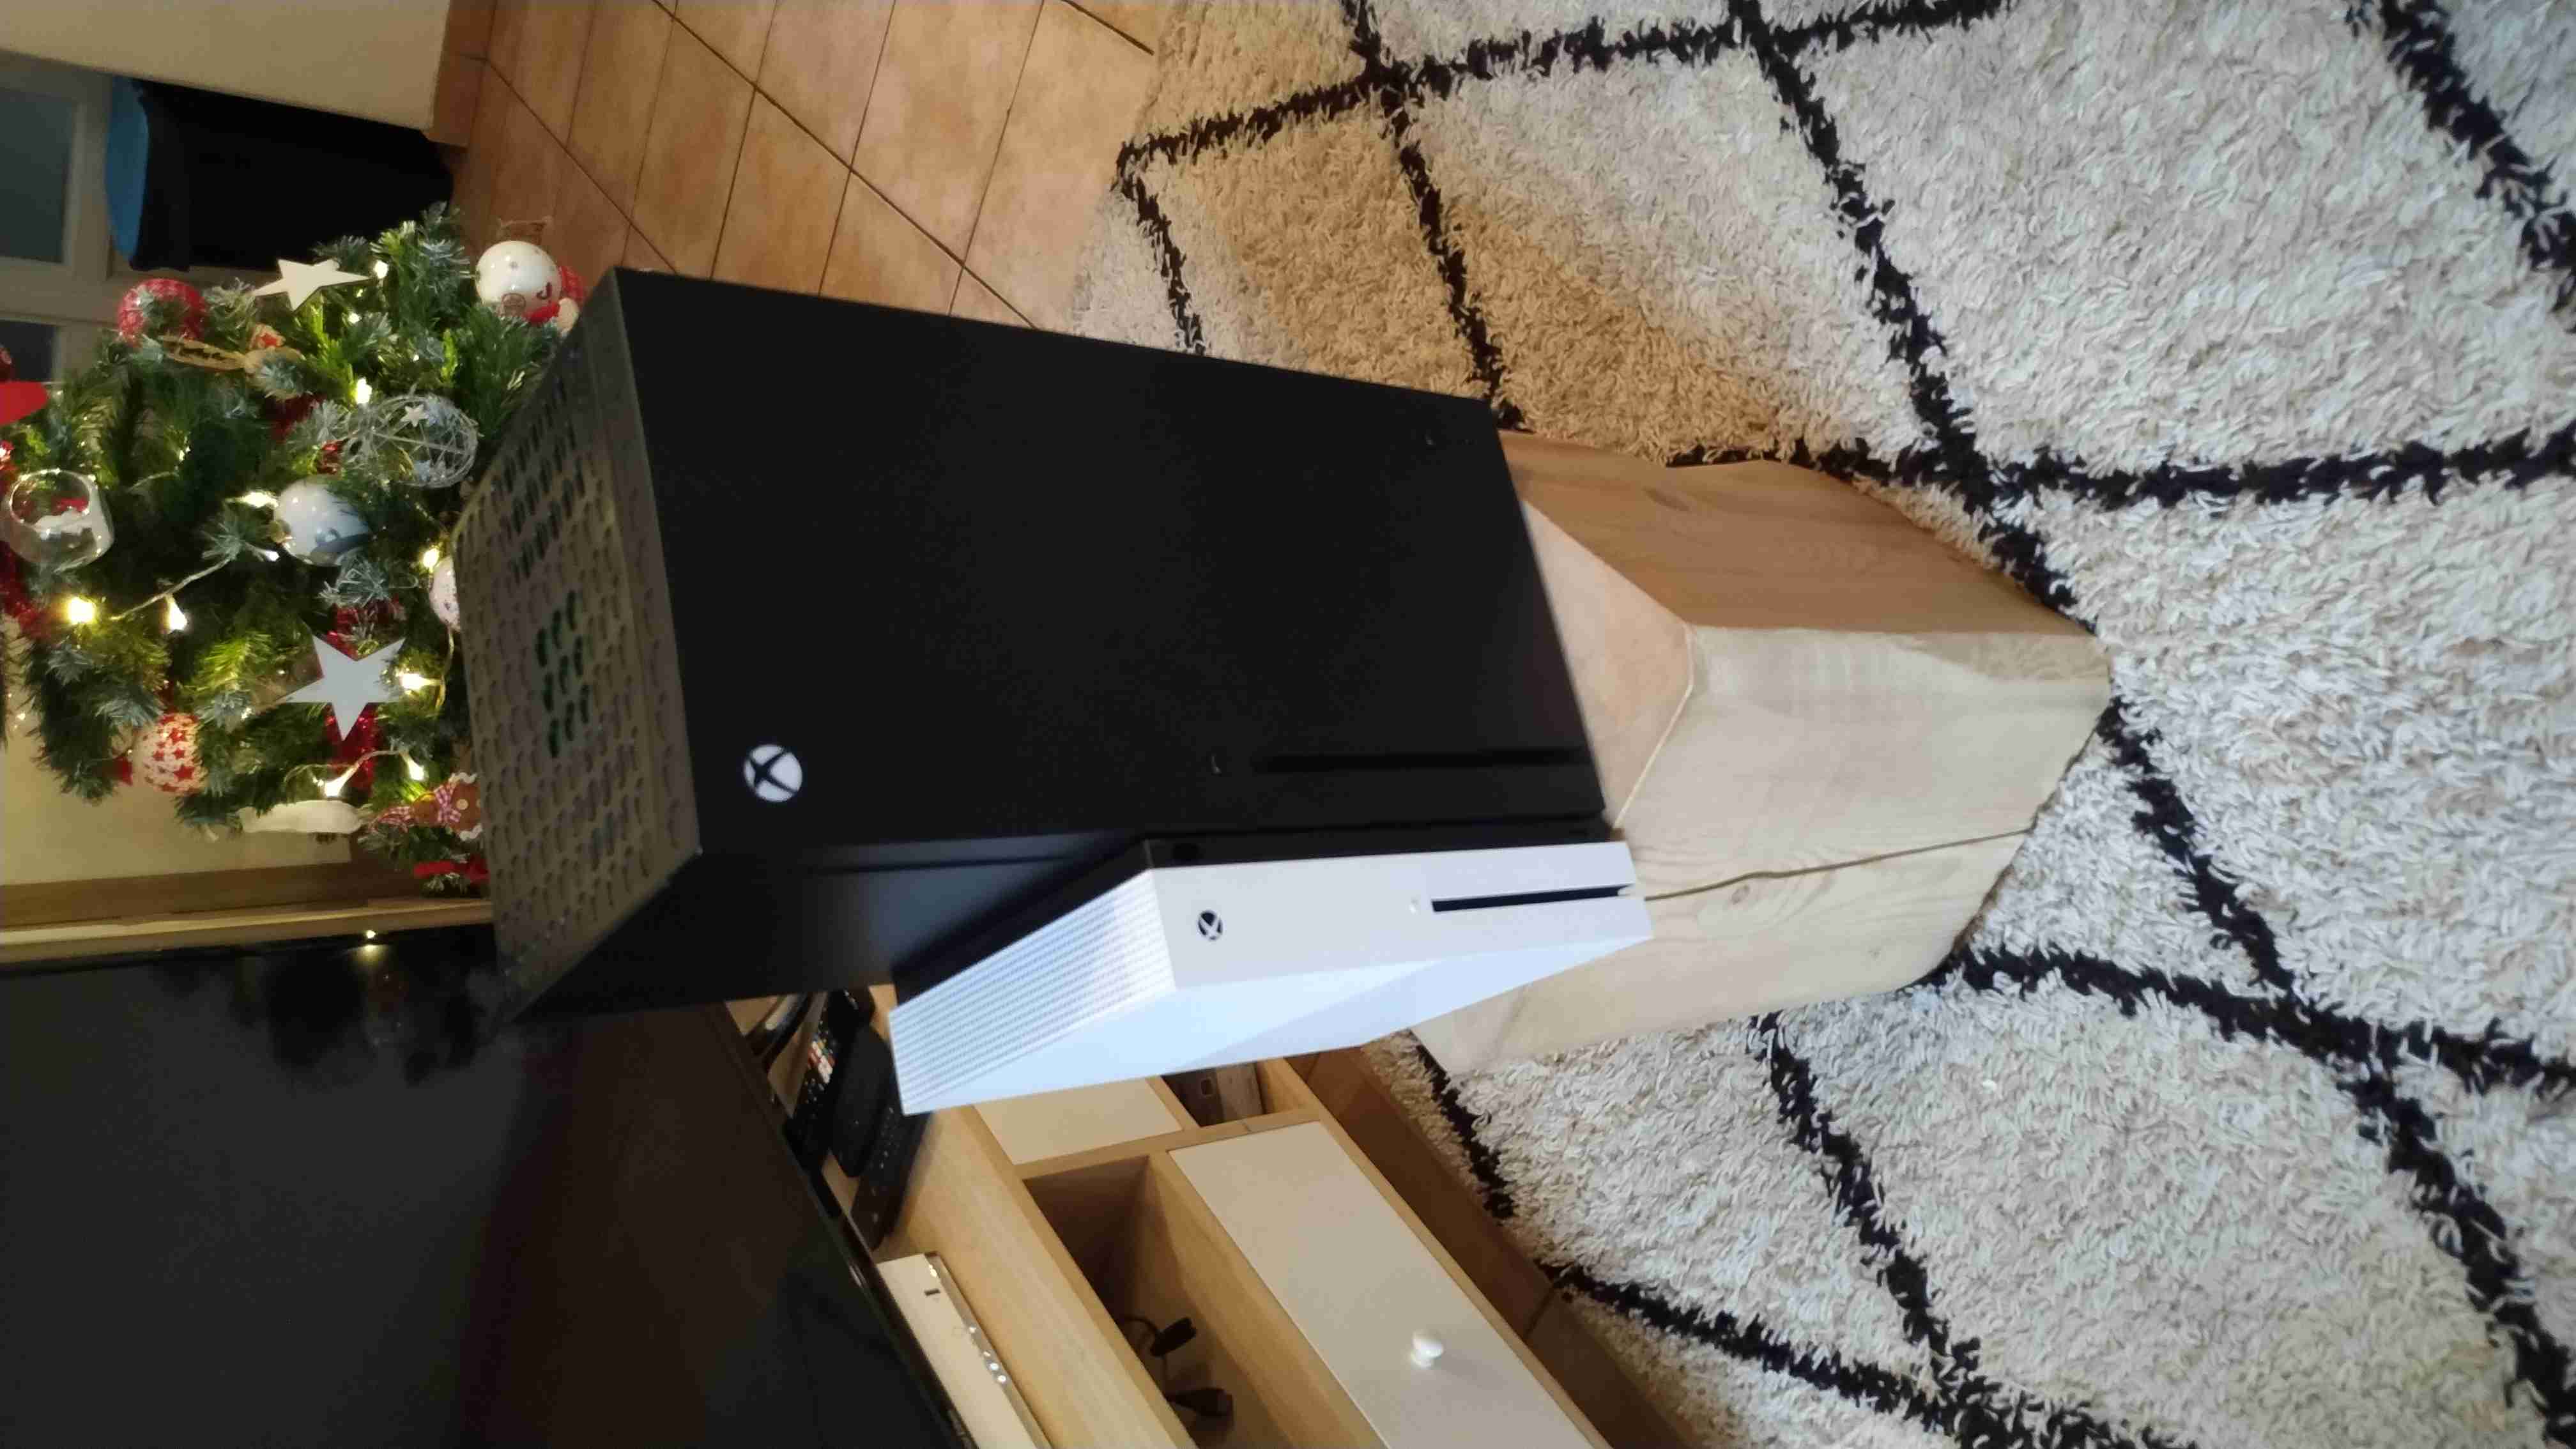 Unboxing maison du mini-frigo Xbox Series X !